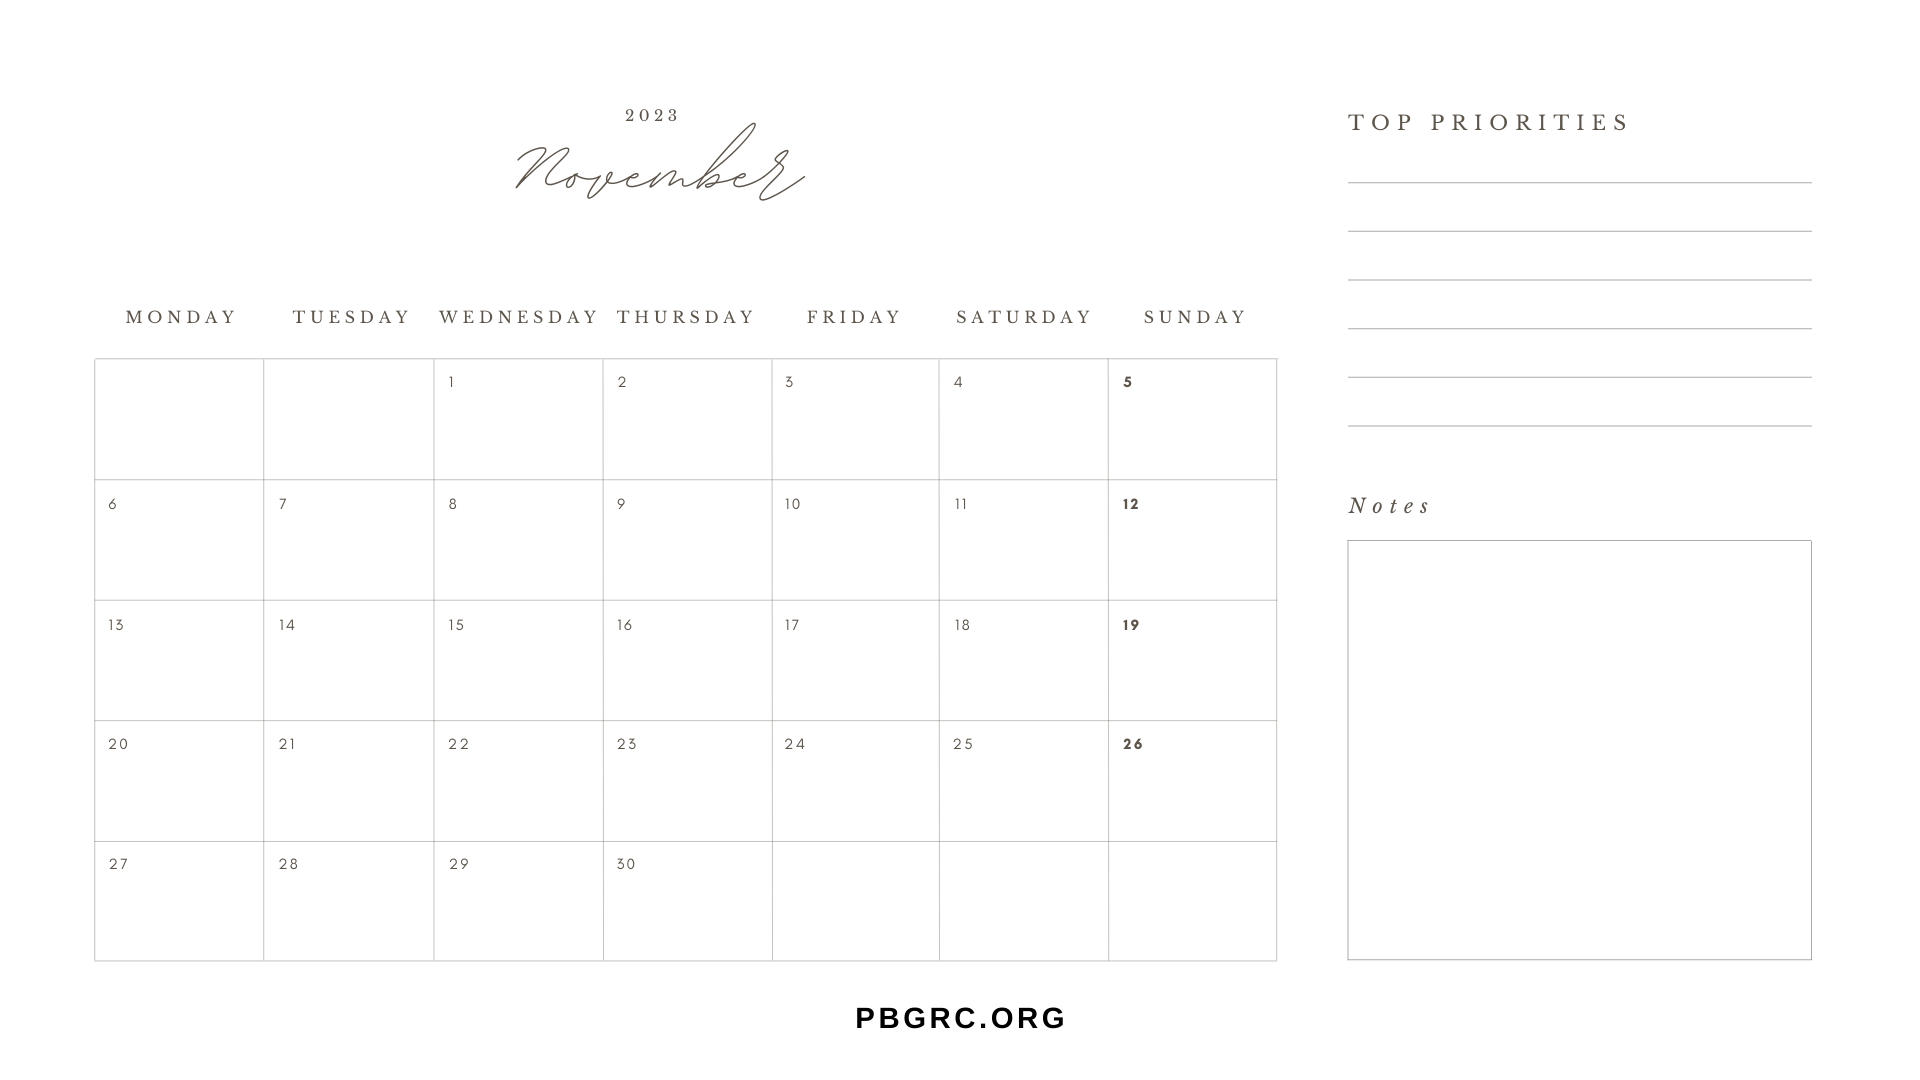 Blank October 2023 Calendar